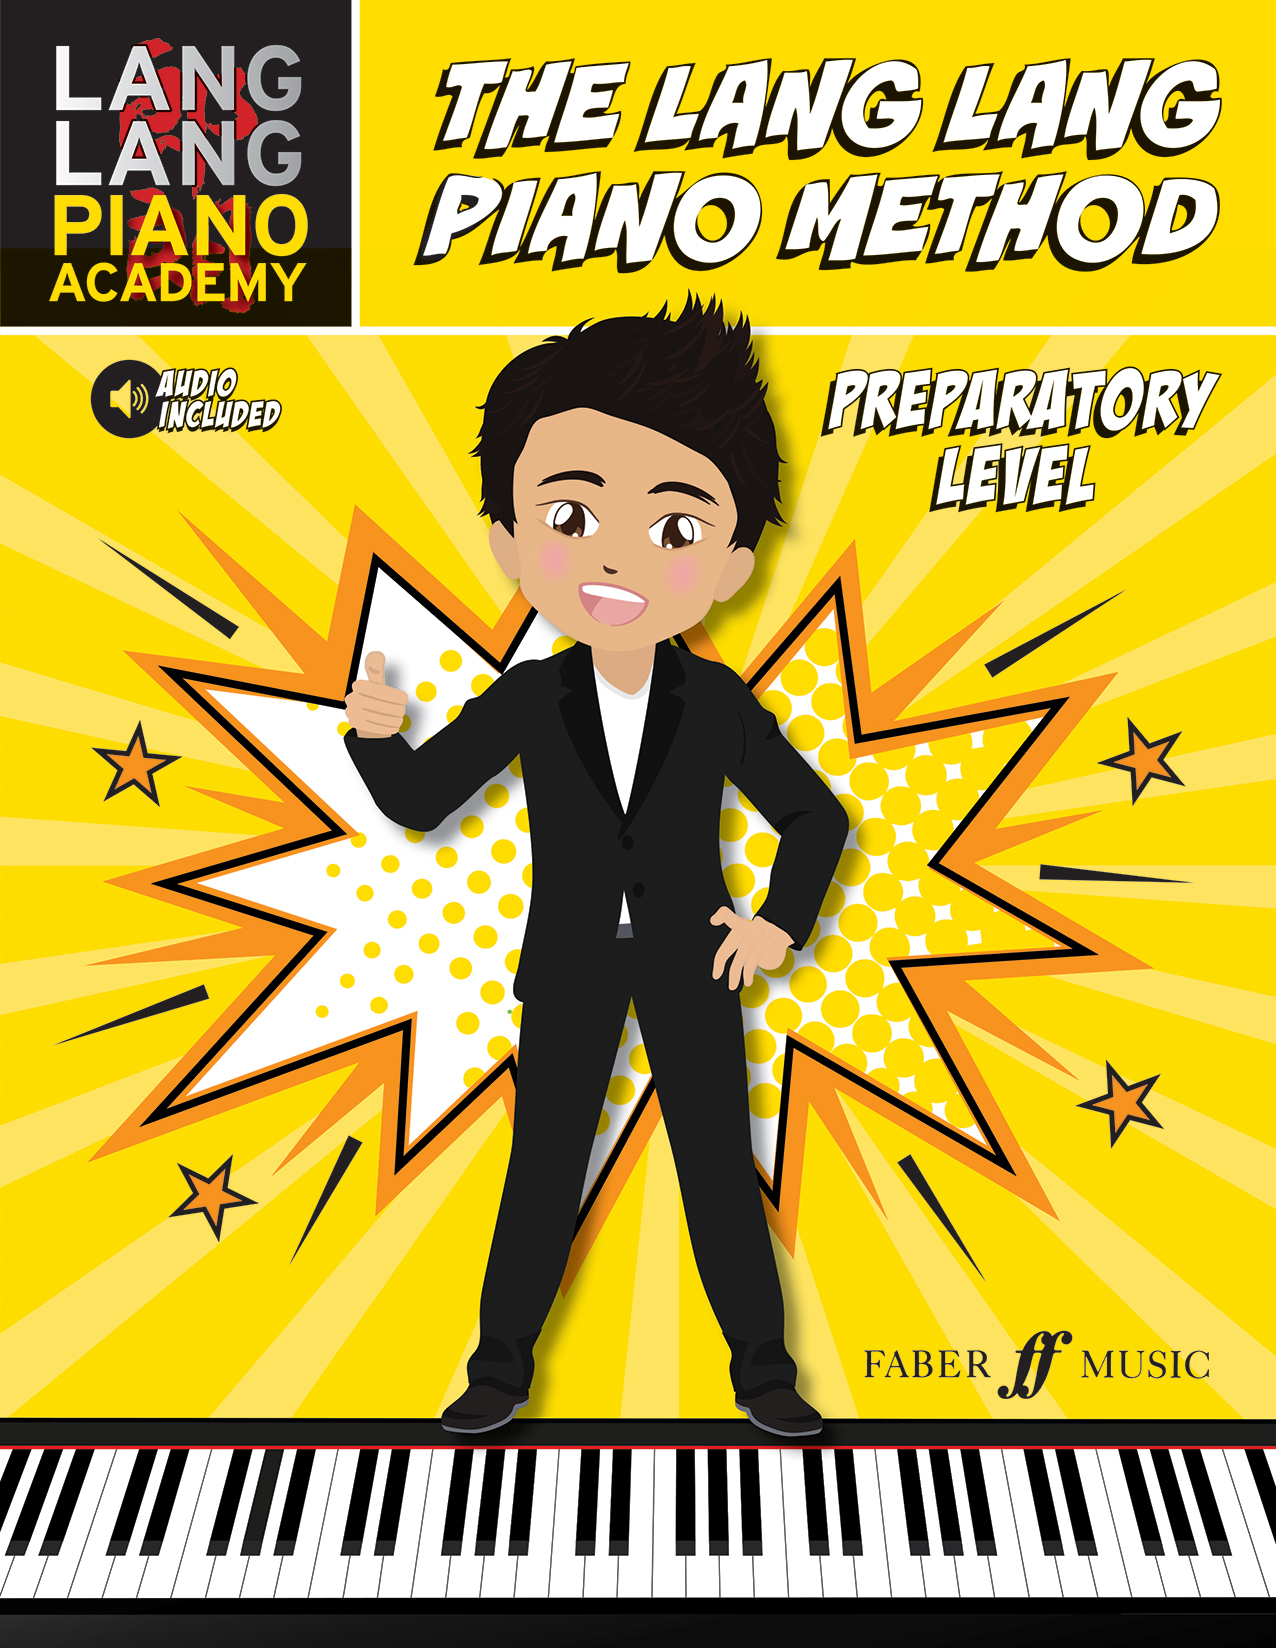 Lang Lang Piano Method Preparatory Level Sheet Music Songbook